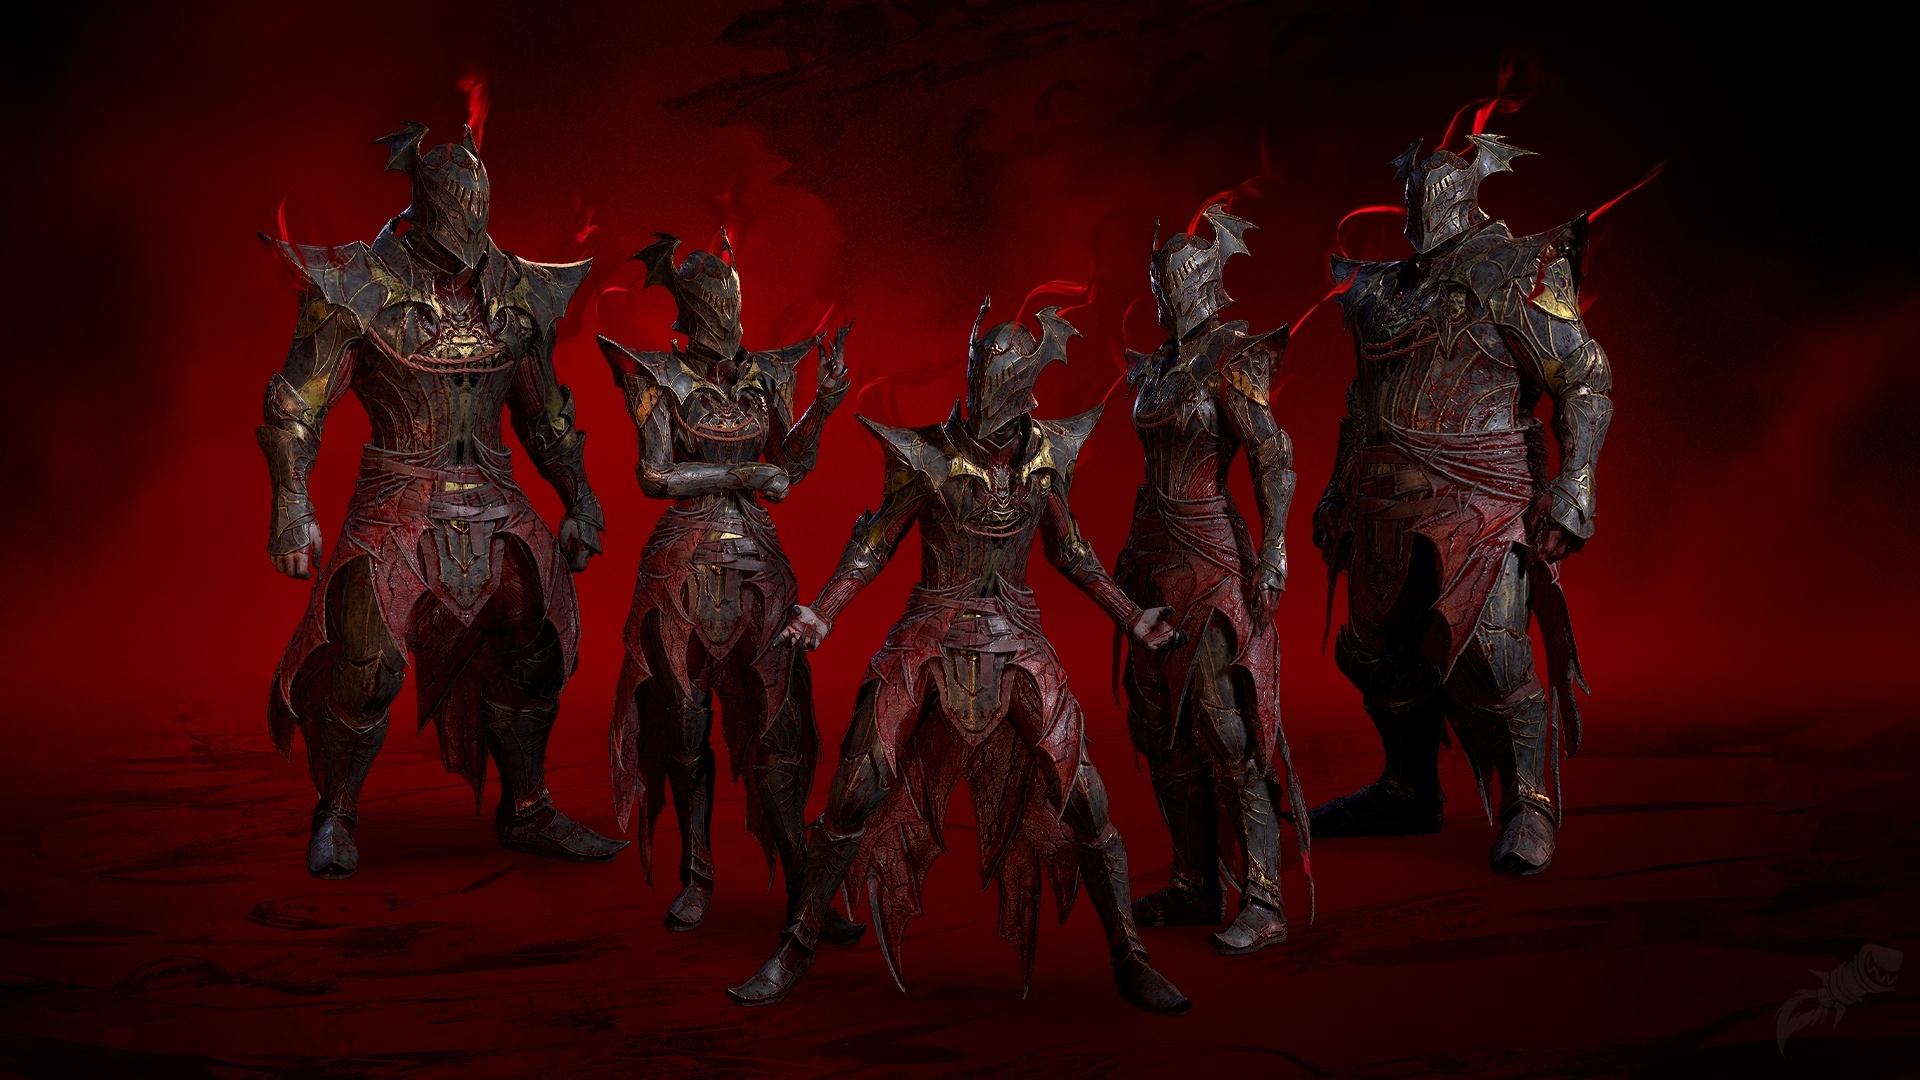 Diablo Immortal  Season 2 Battle Pass 